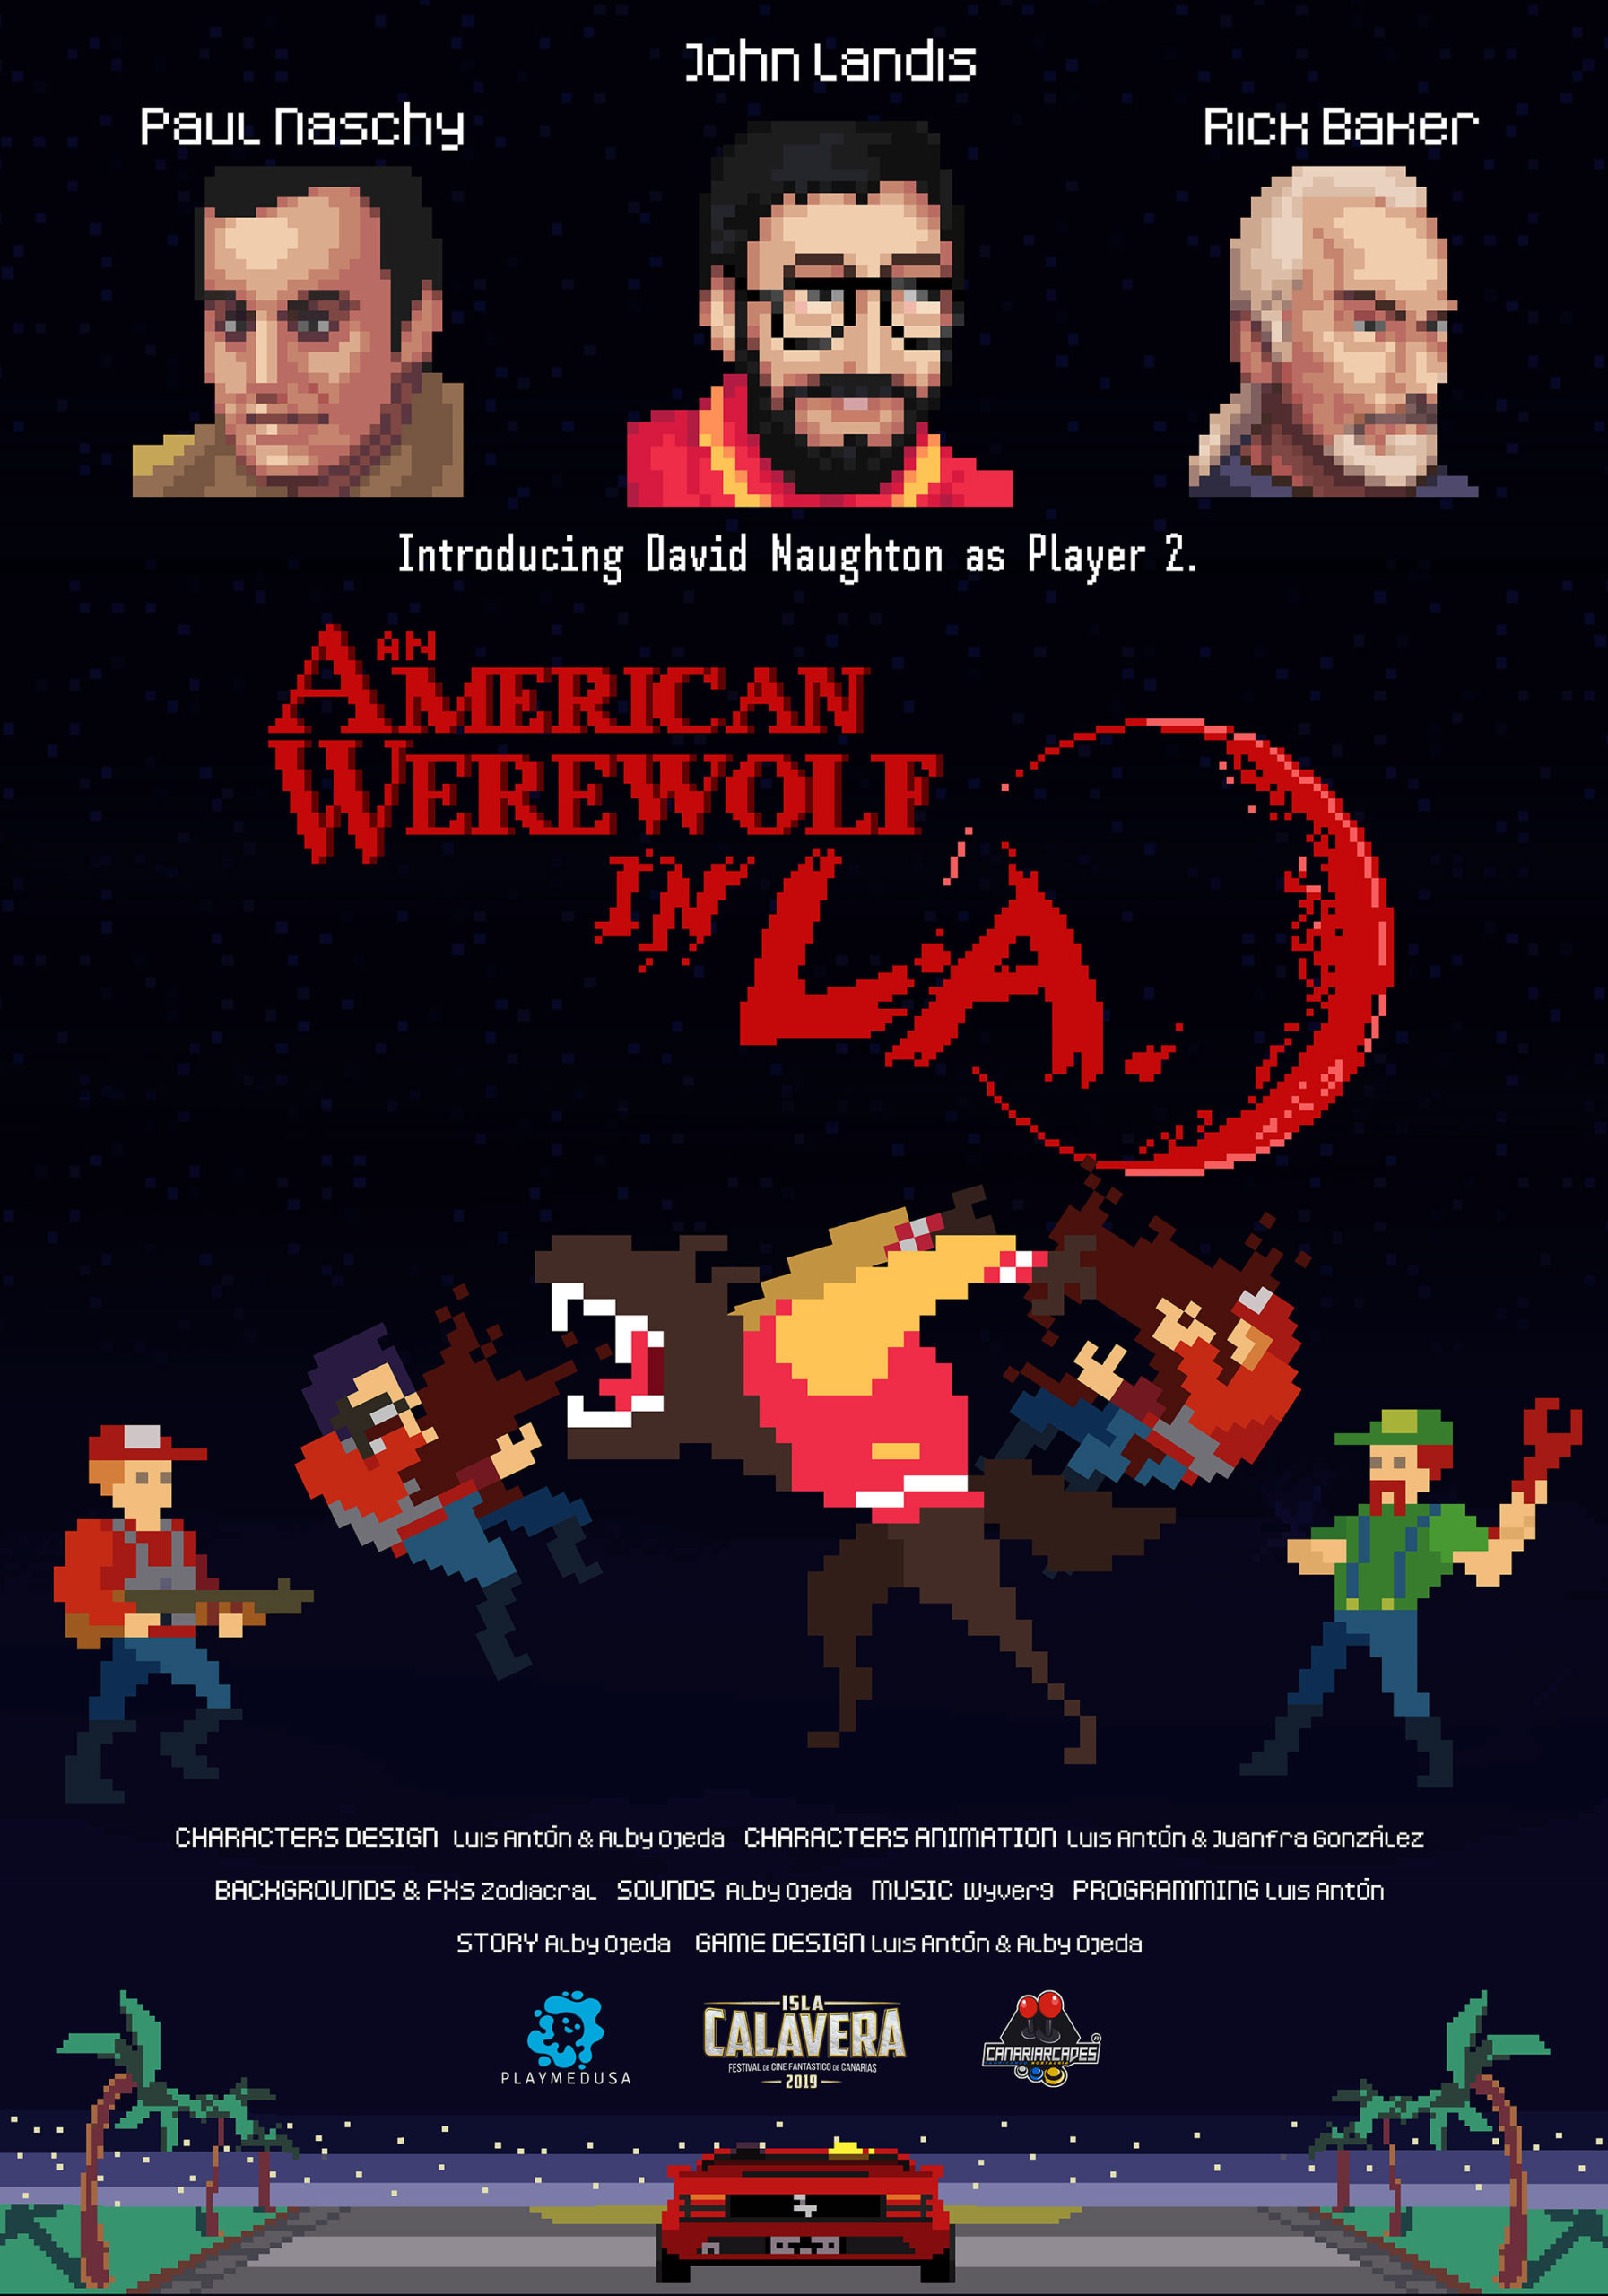 Cartel del videojuego 'An american werewolf in L.A.'